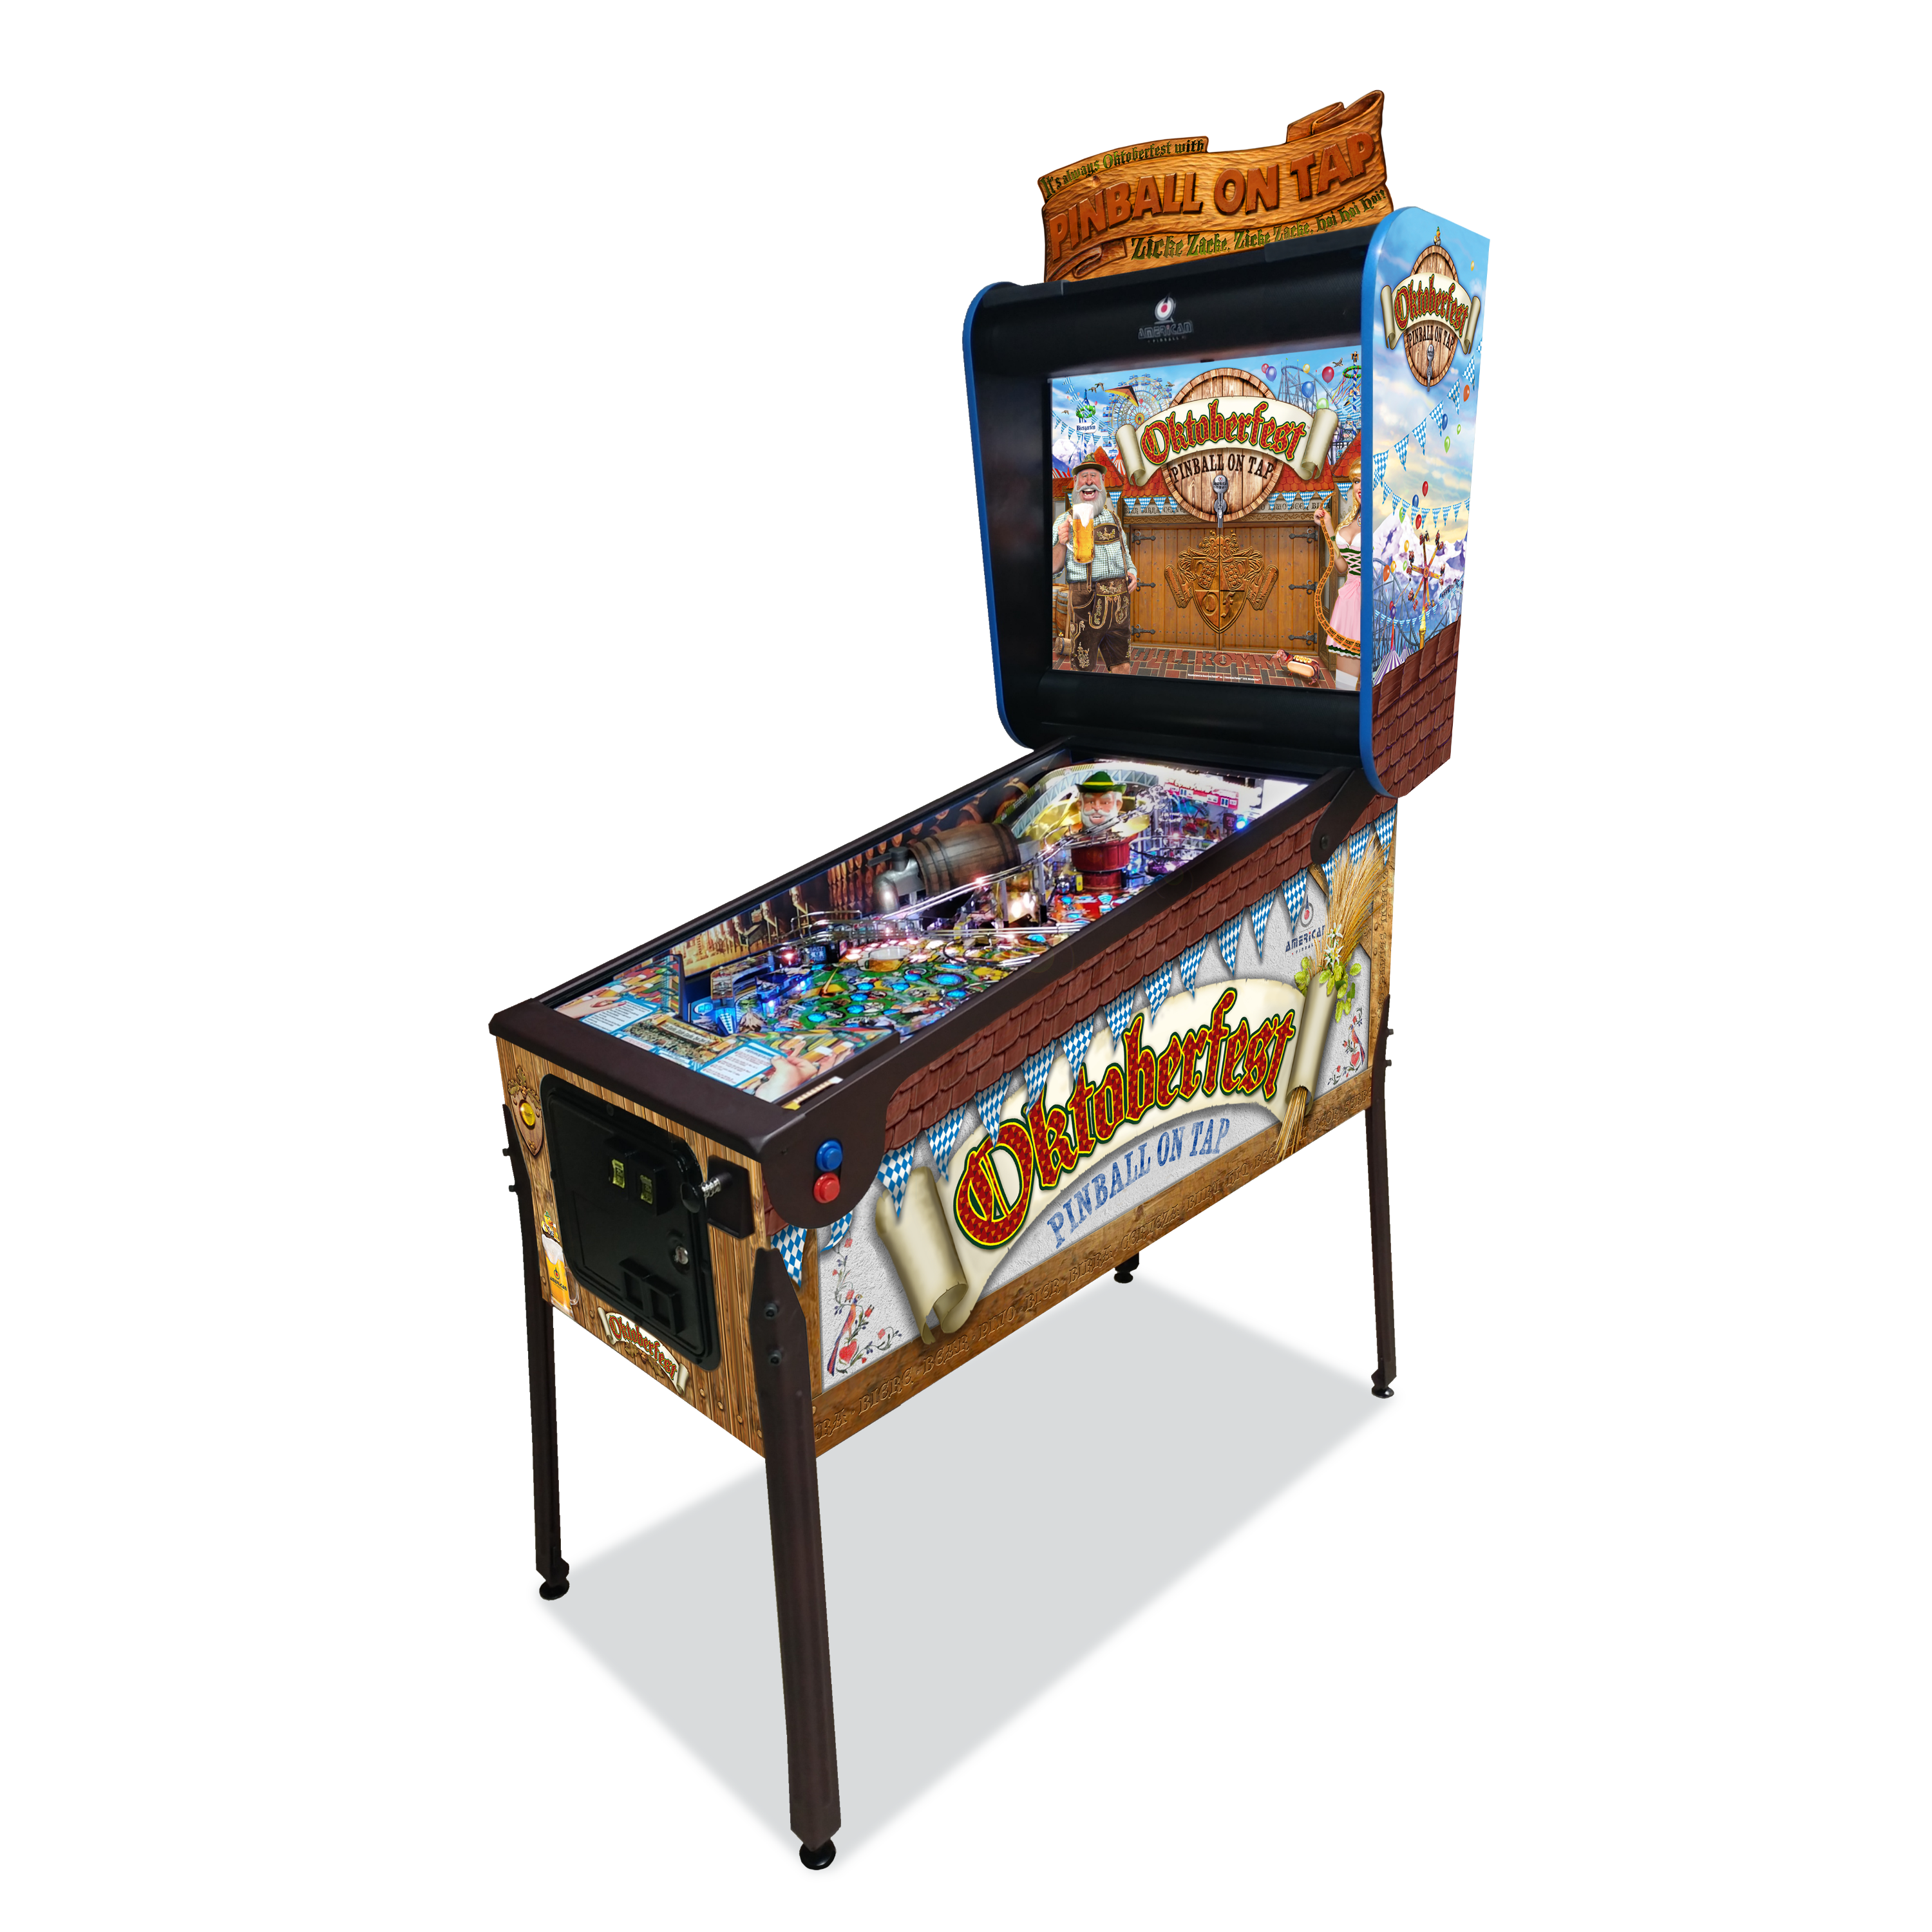 Pinball machine for sale